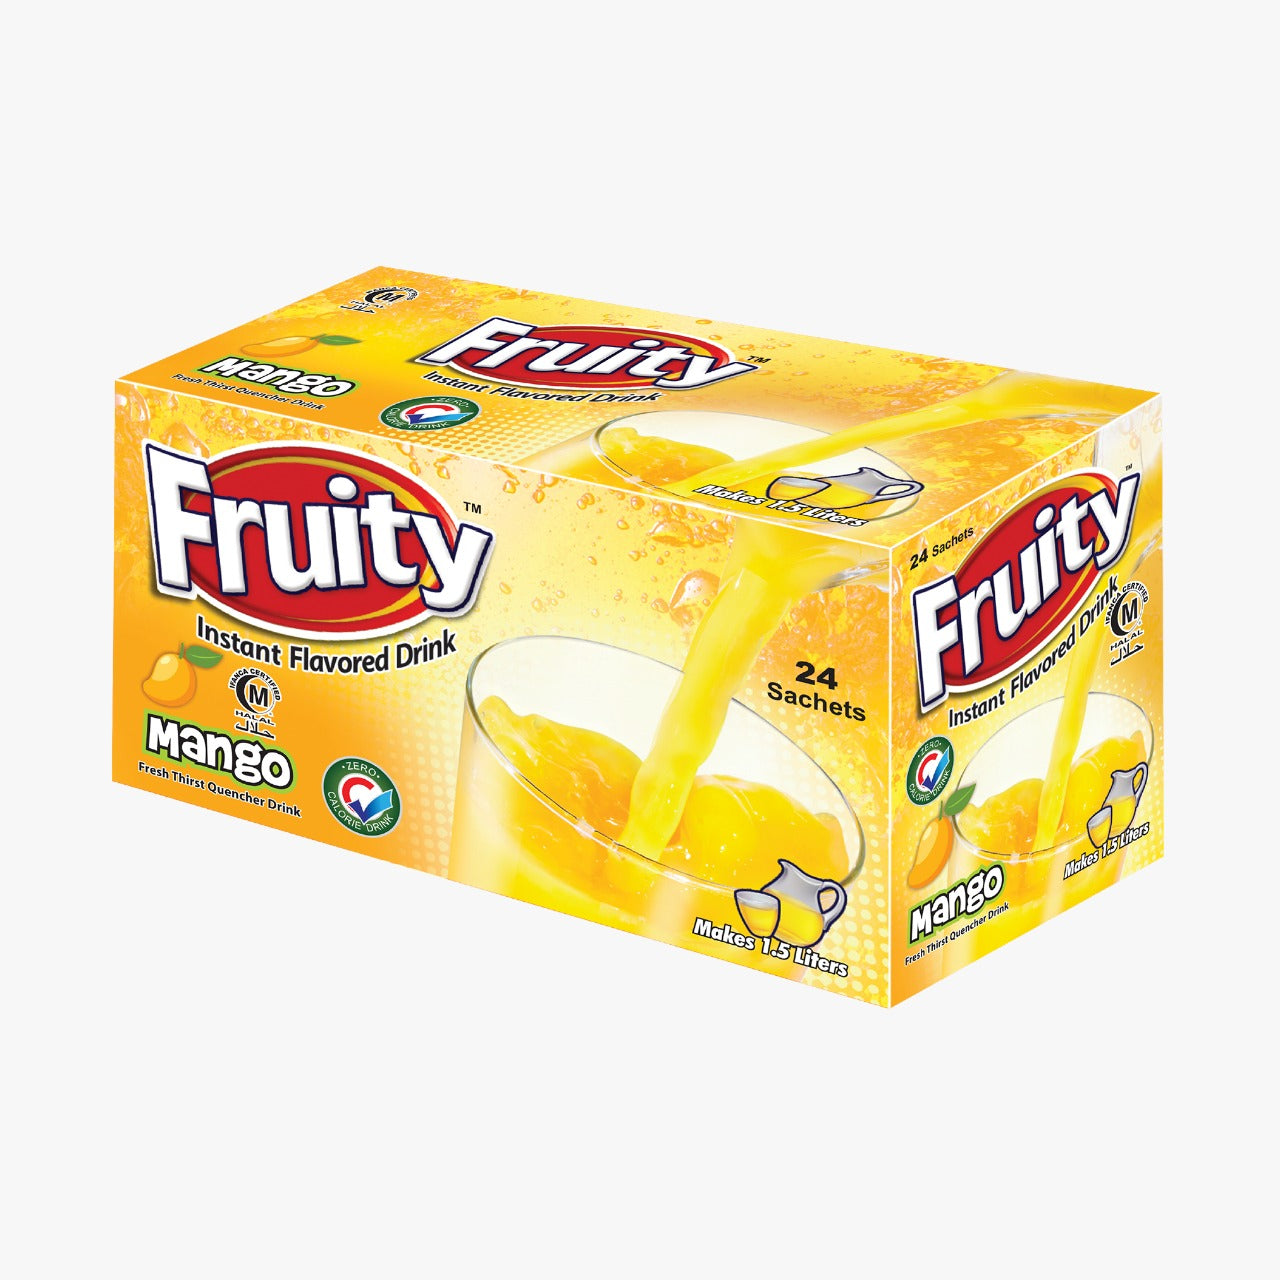 Fruity Instant Drink Mango. Box